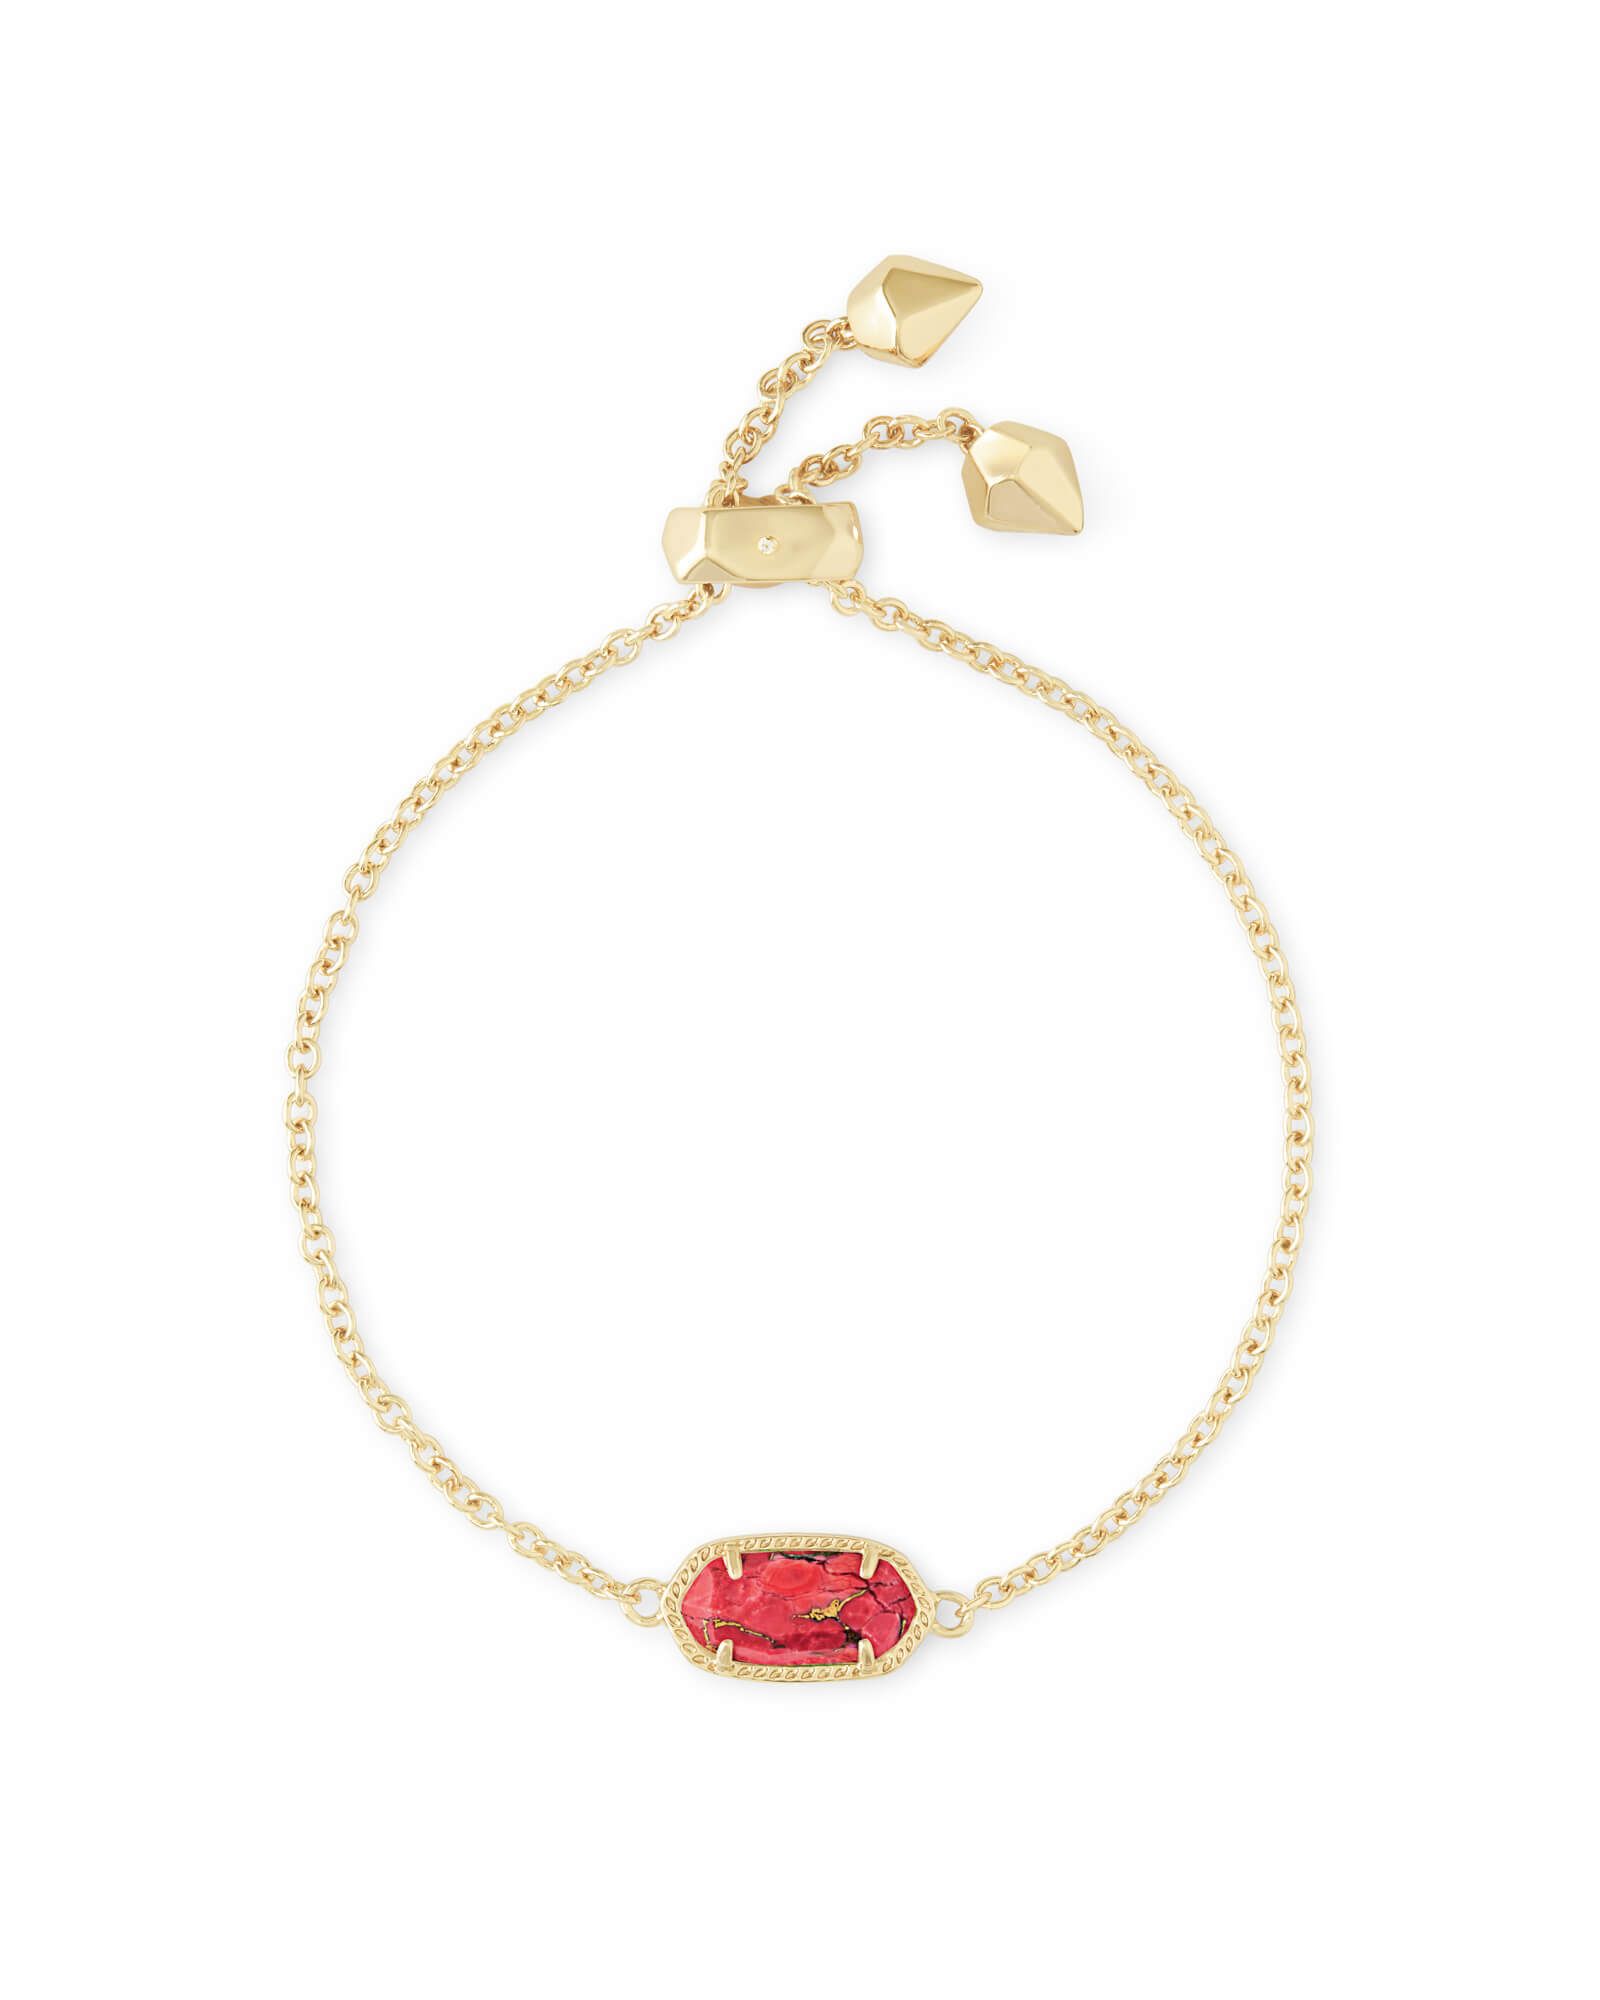 Elaina Gold Adjustable Chain Bracelet in Bronze Veined Red Magnesite | Kendra Scott